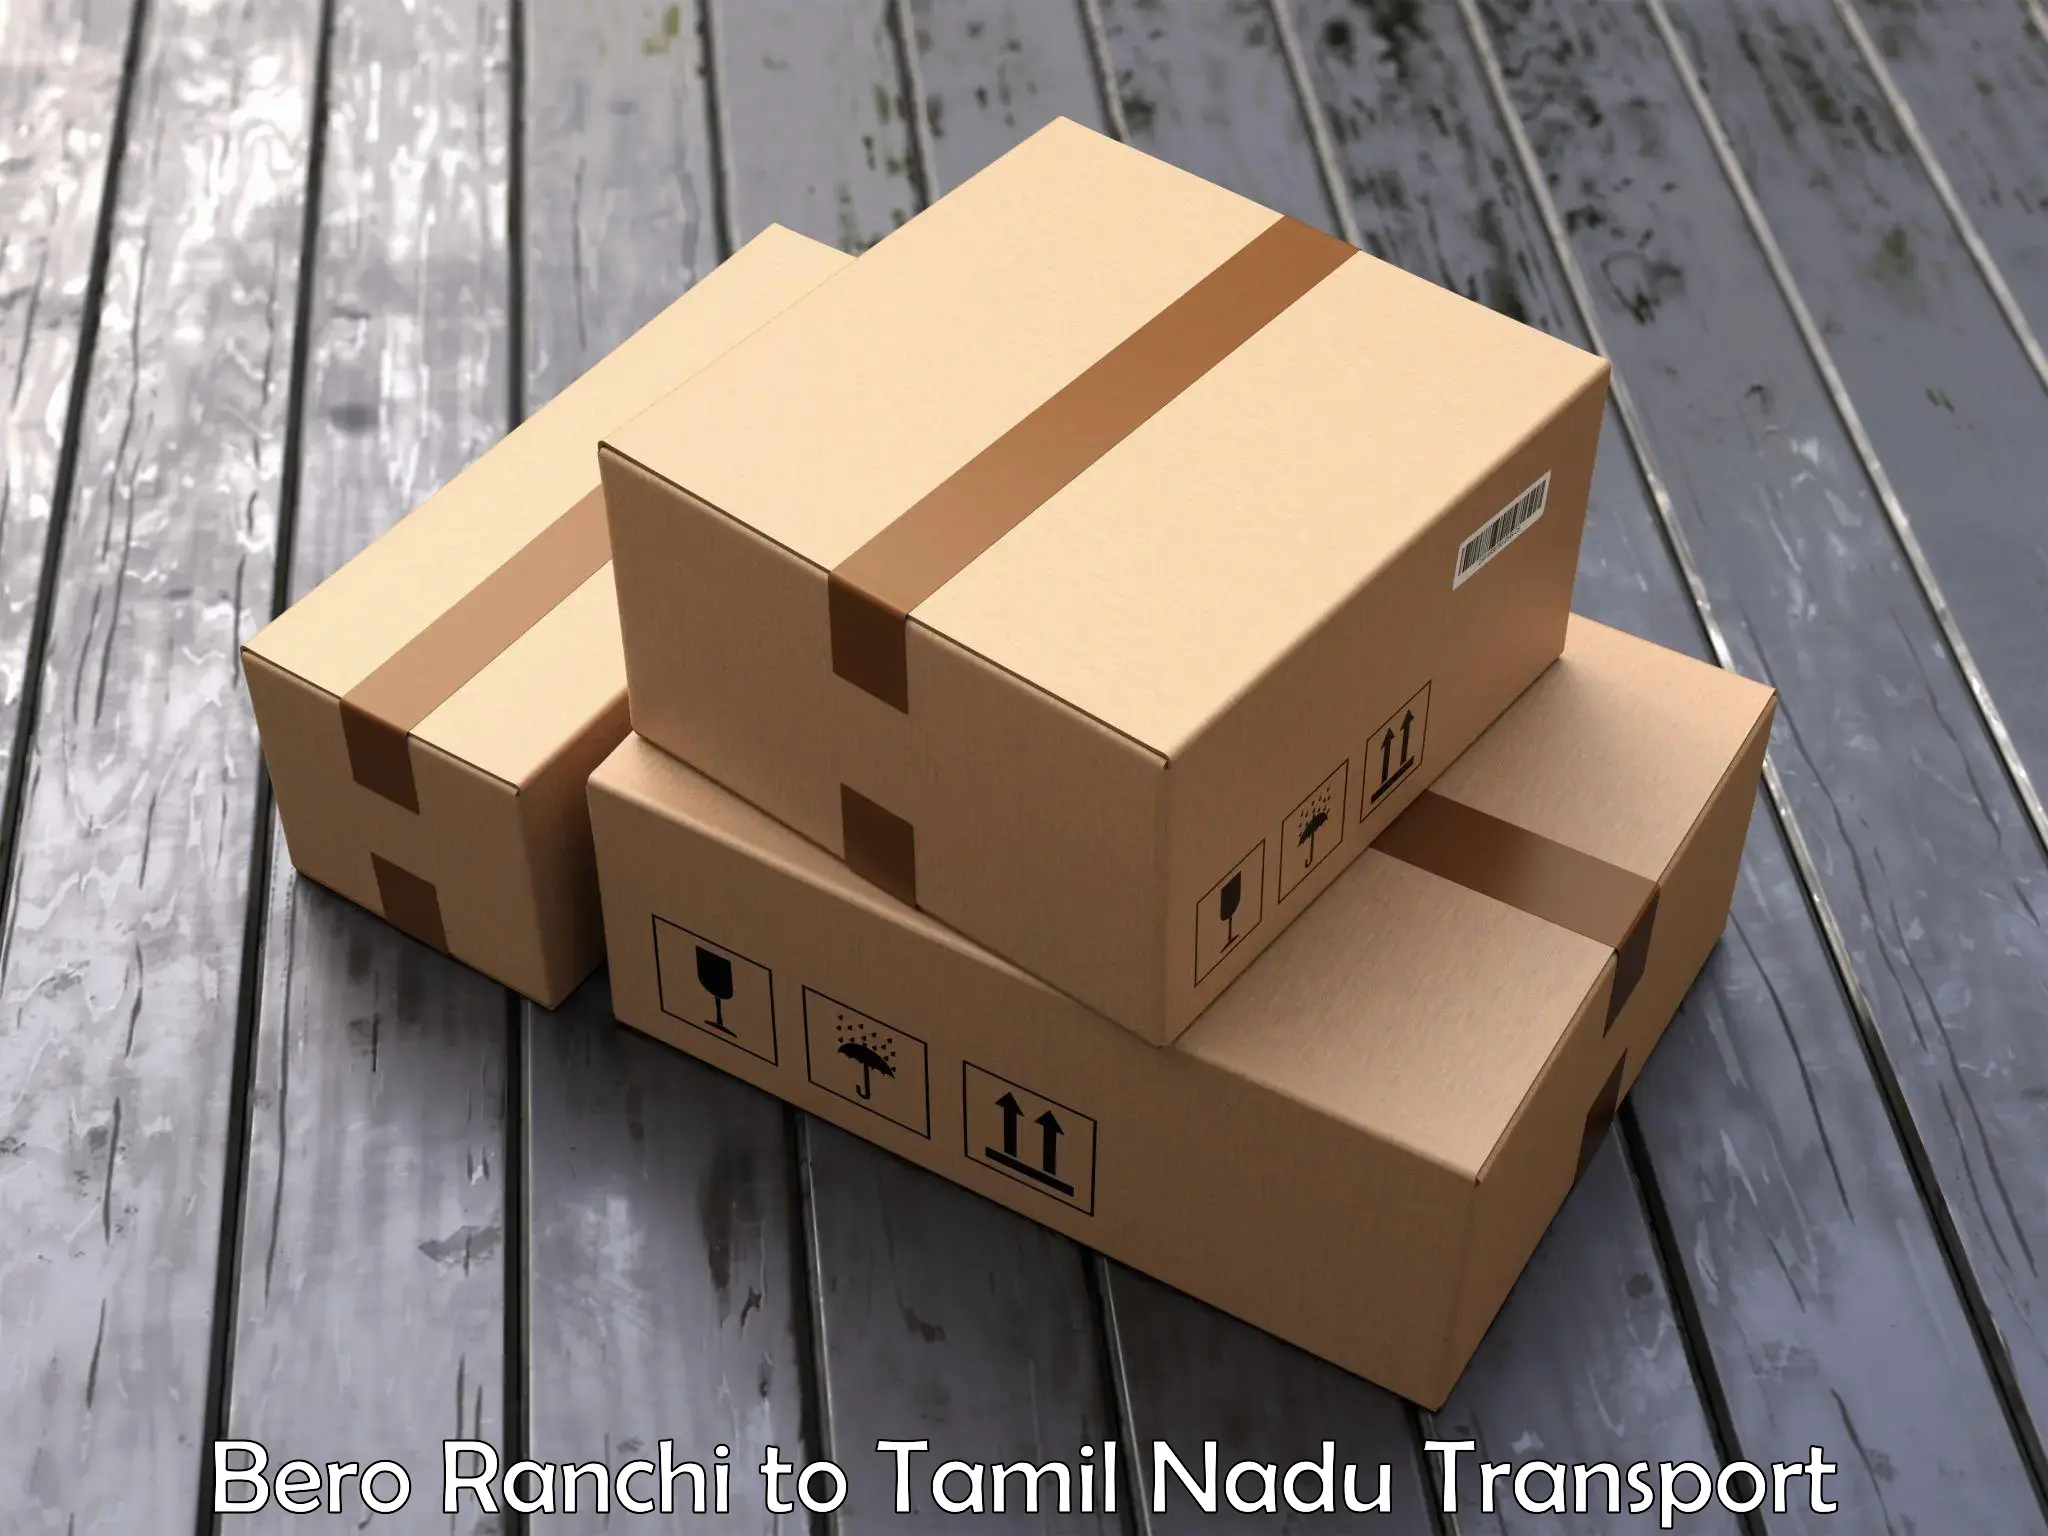 Delivery service Bero Ranchi to Tamil Nadu